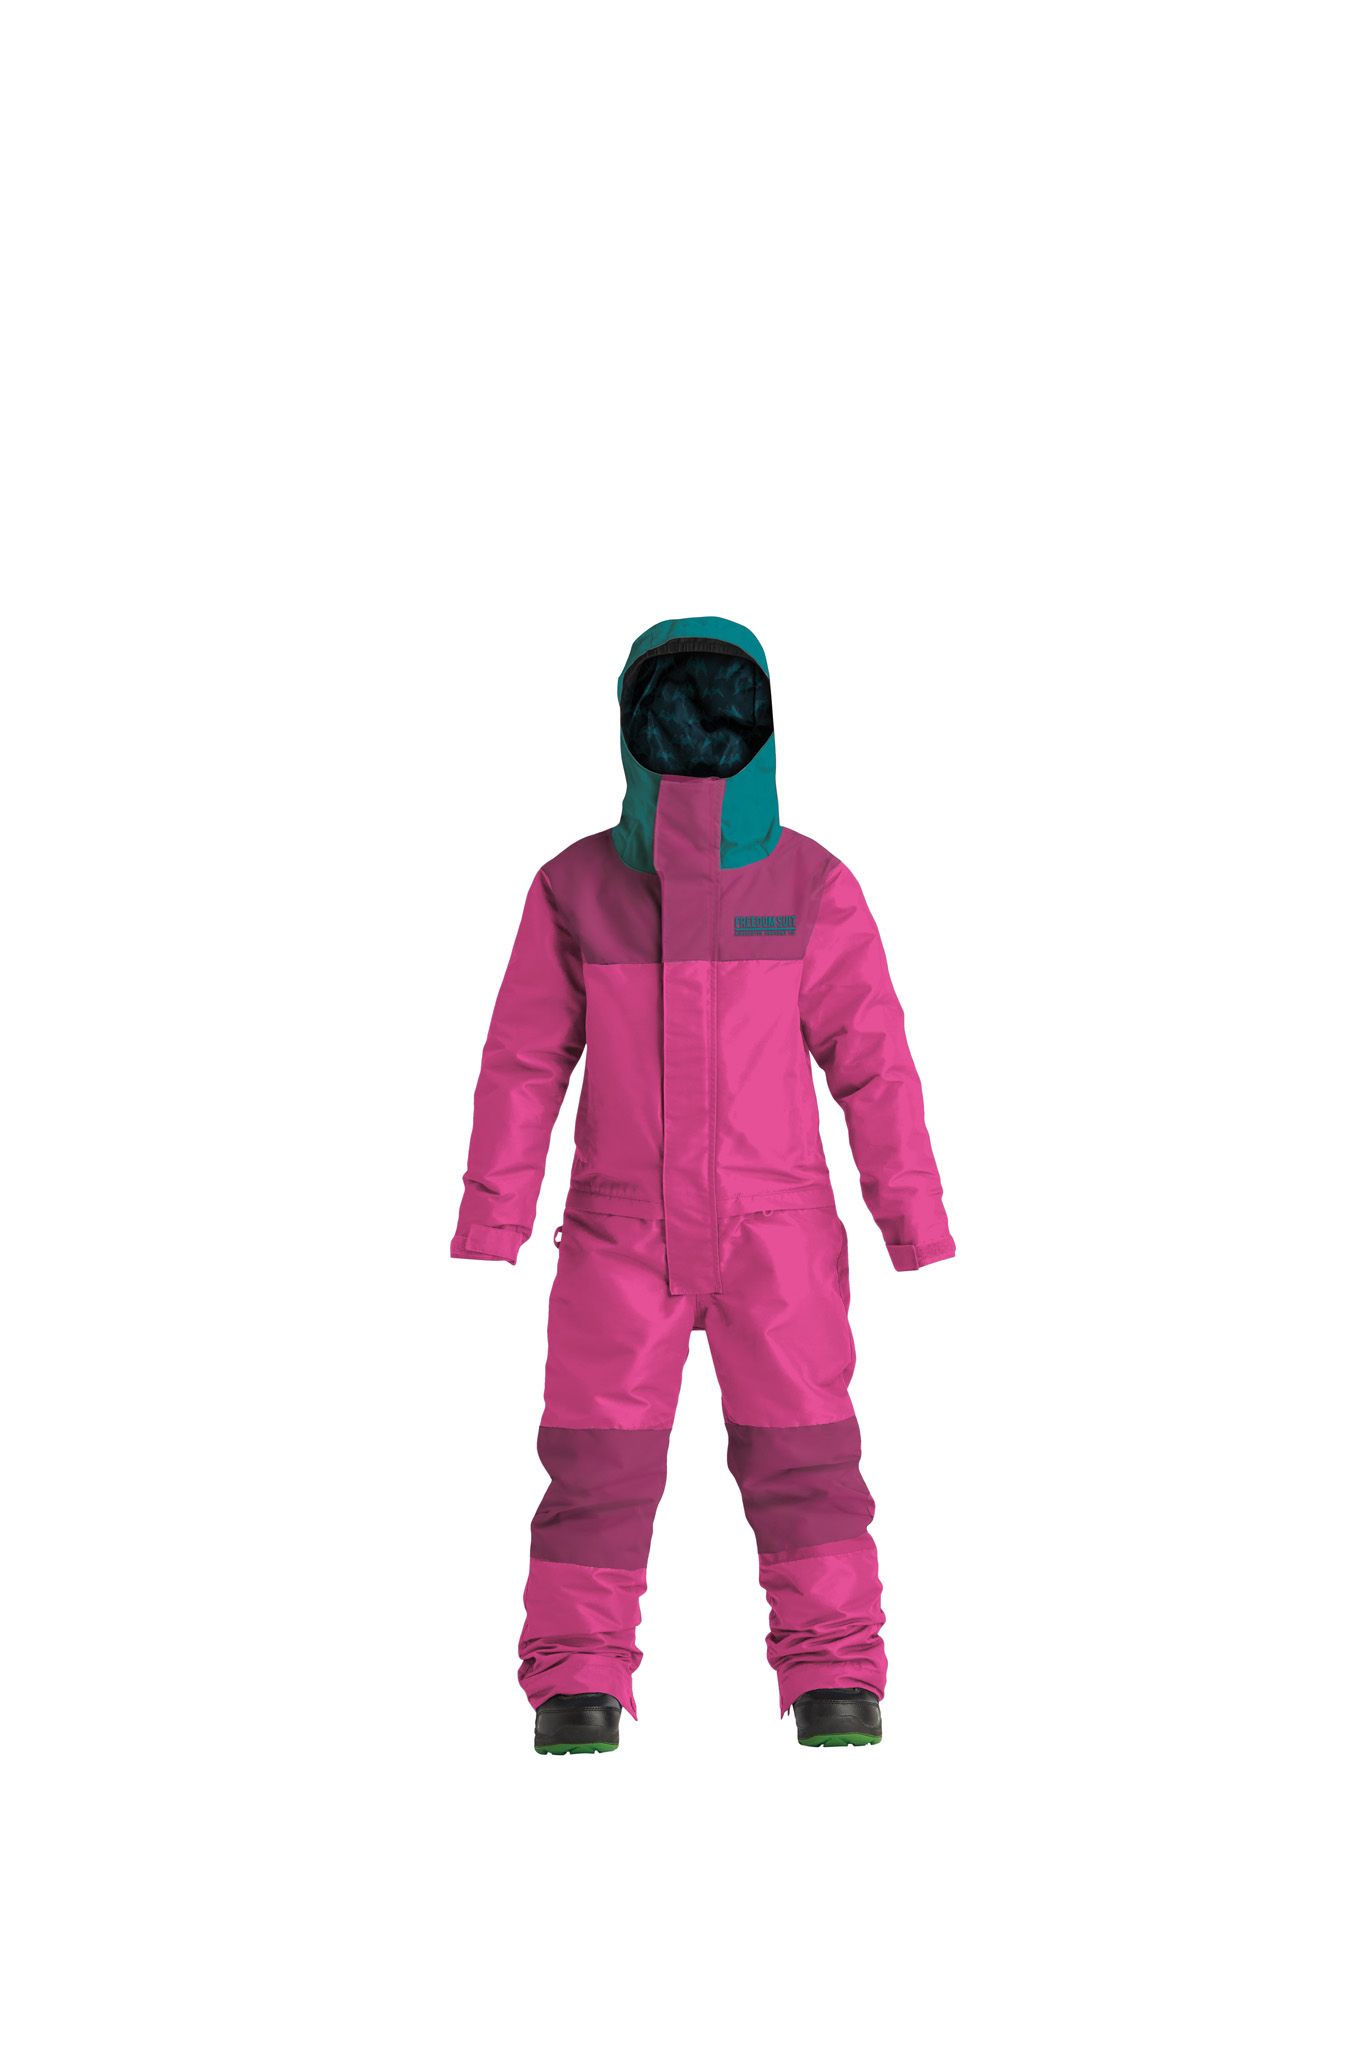 Airblaster Youth Freedom Suit Snowboardanzug pink